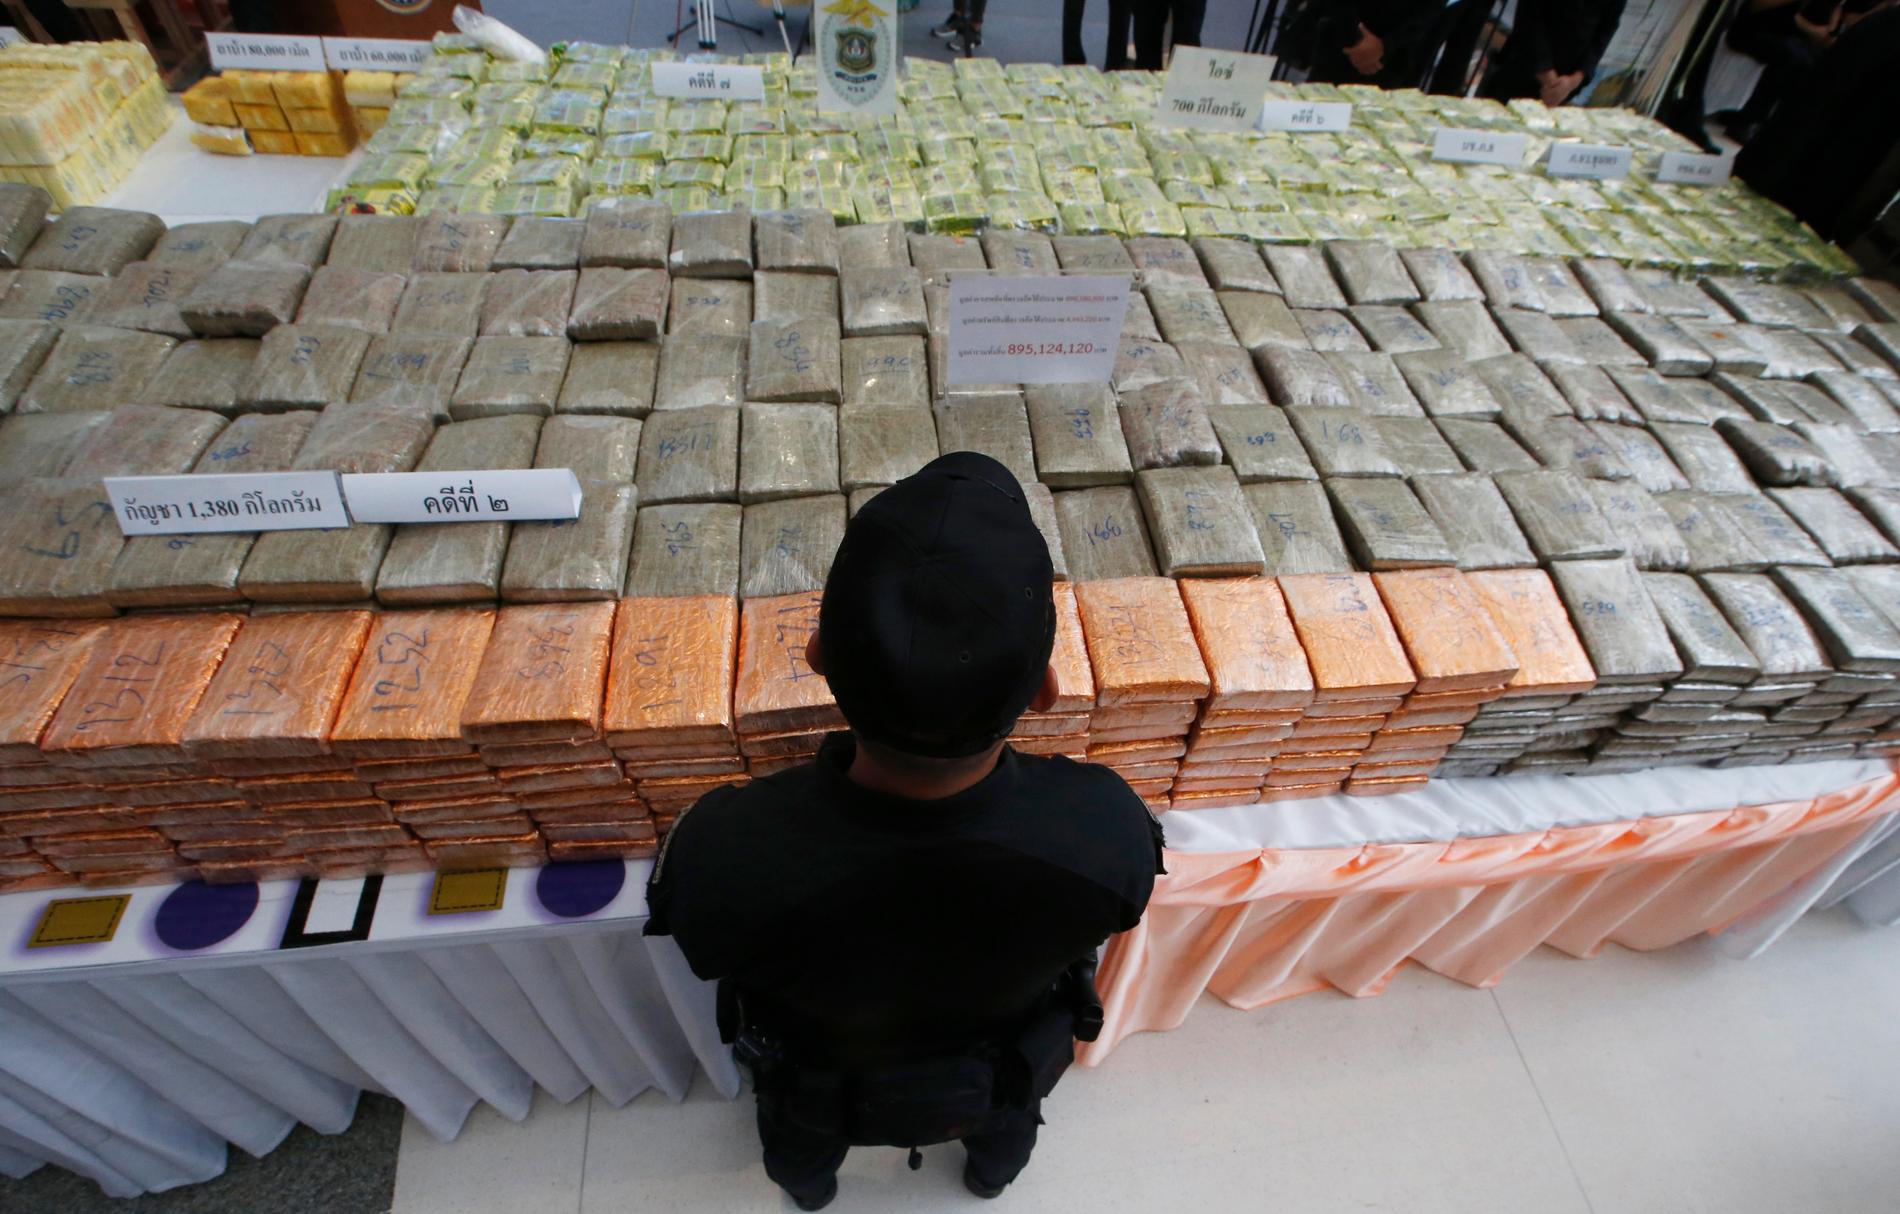 Polis i Bangkok visar i april upp droger som beslagtagits. Arkivbild.